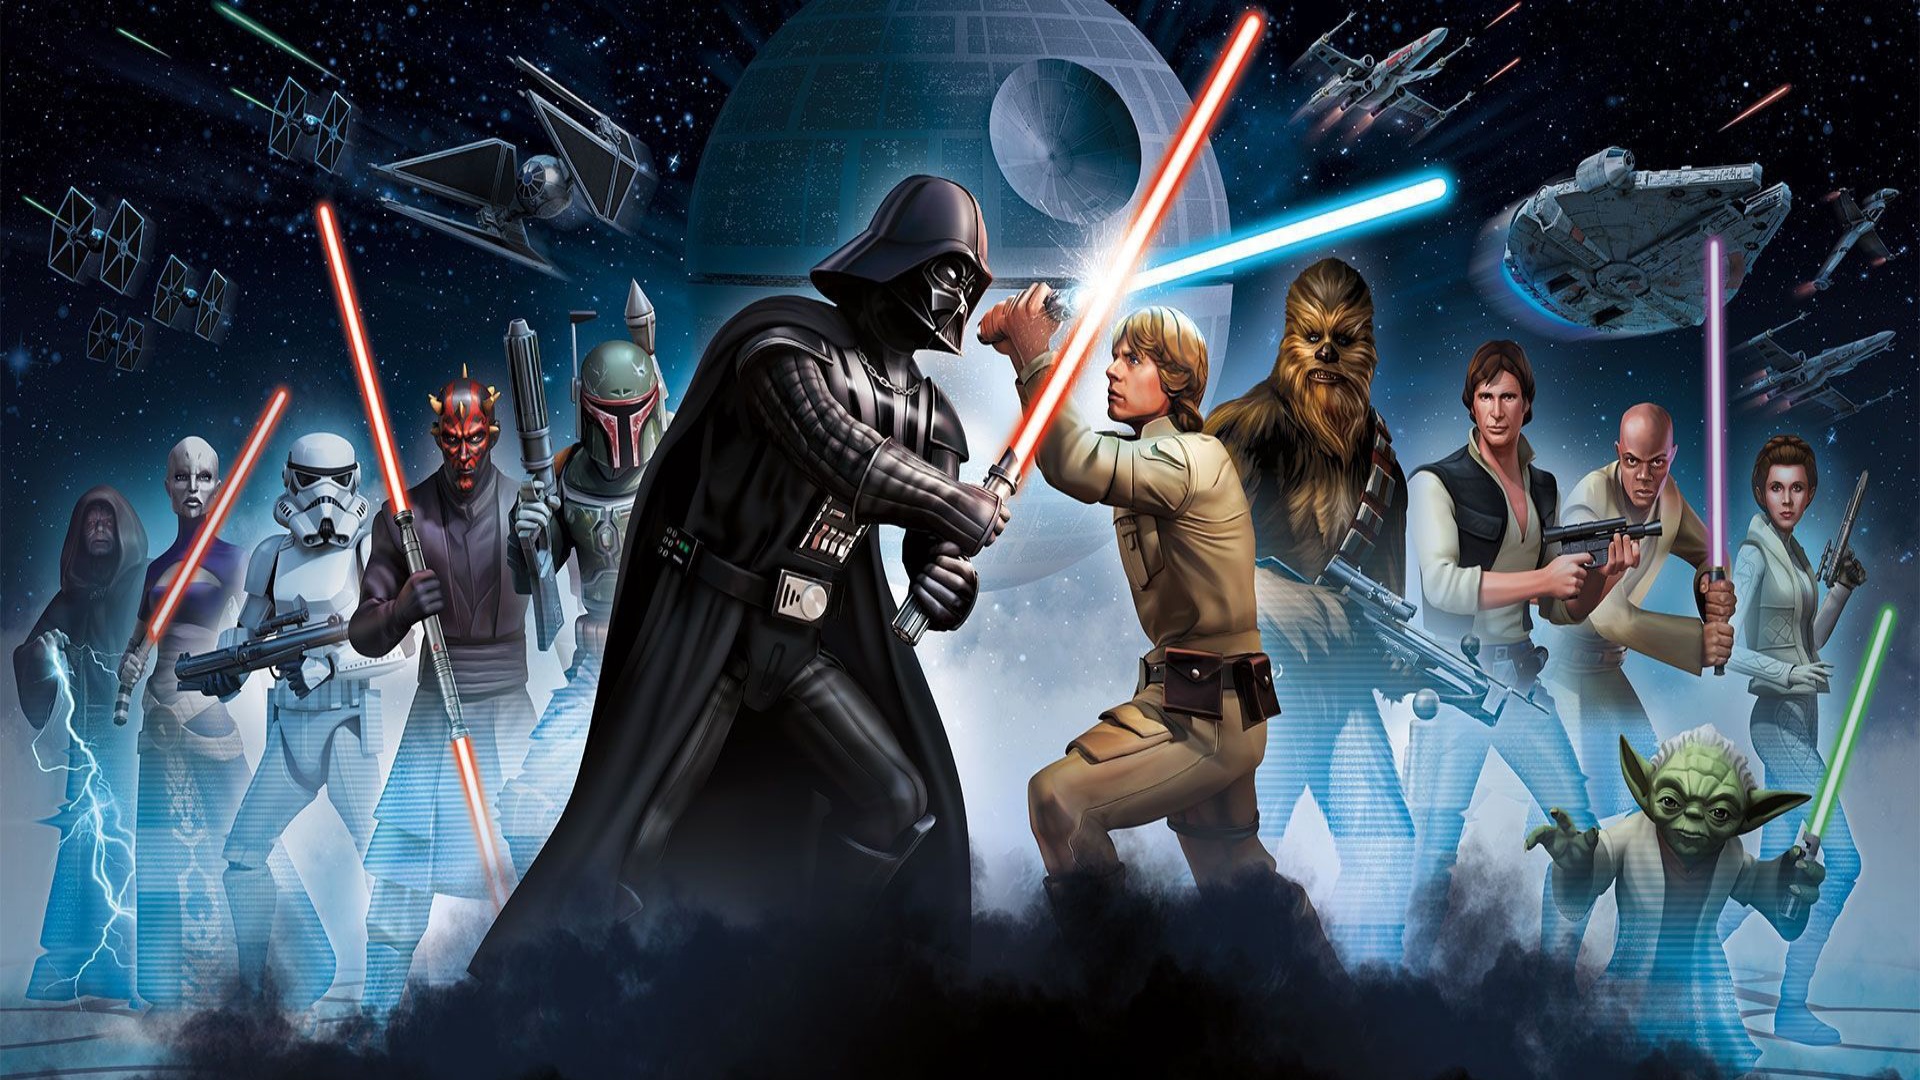 Boba Fett Chewbacca Darth Maul Darth Sidious Darth Vader Death Star Han Solo Luke Skywalker Mace Win 1920x1080